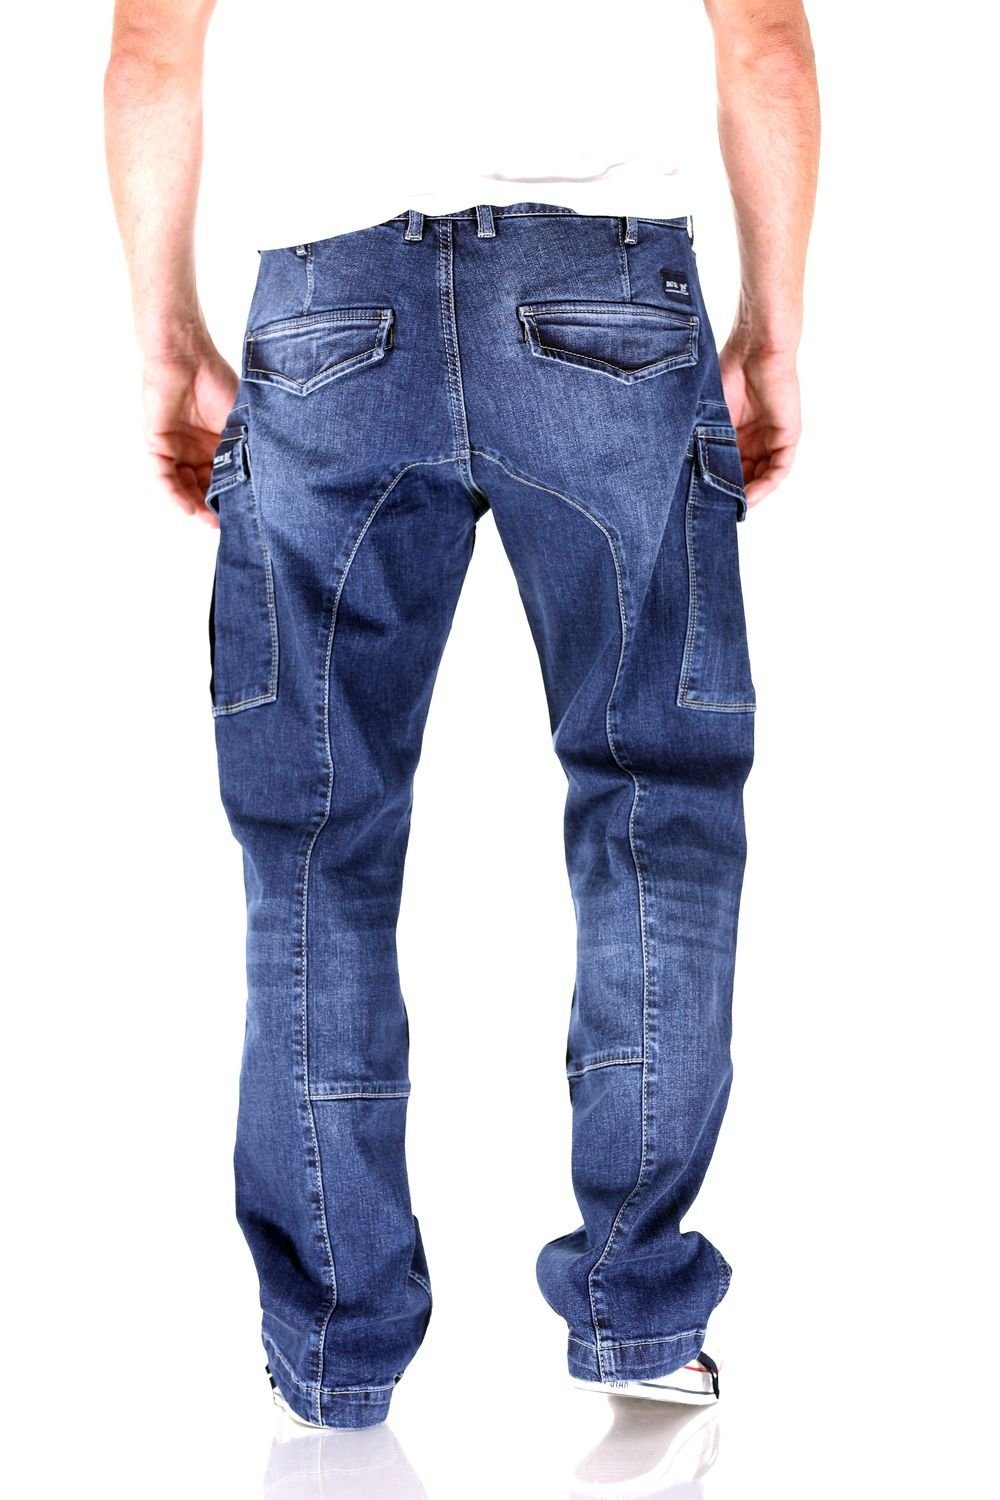 Seven Aged Dark Big Brian Herren Seven Cargo Big Cargojeans Jeans